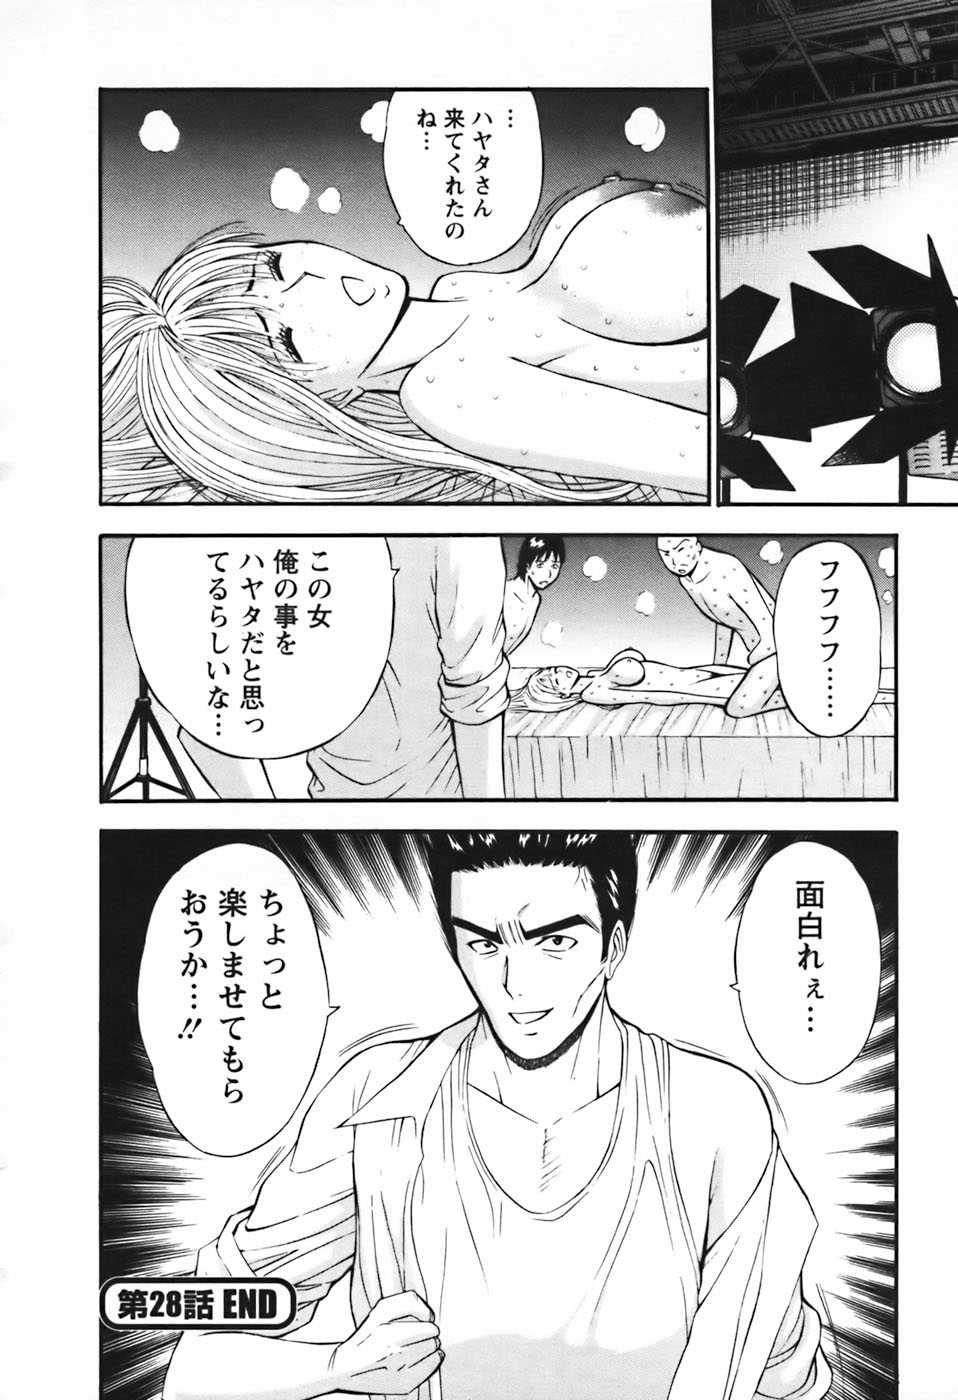 Chosuke nagashima Sexual Harassment Man Vol. 03 